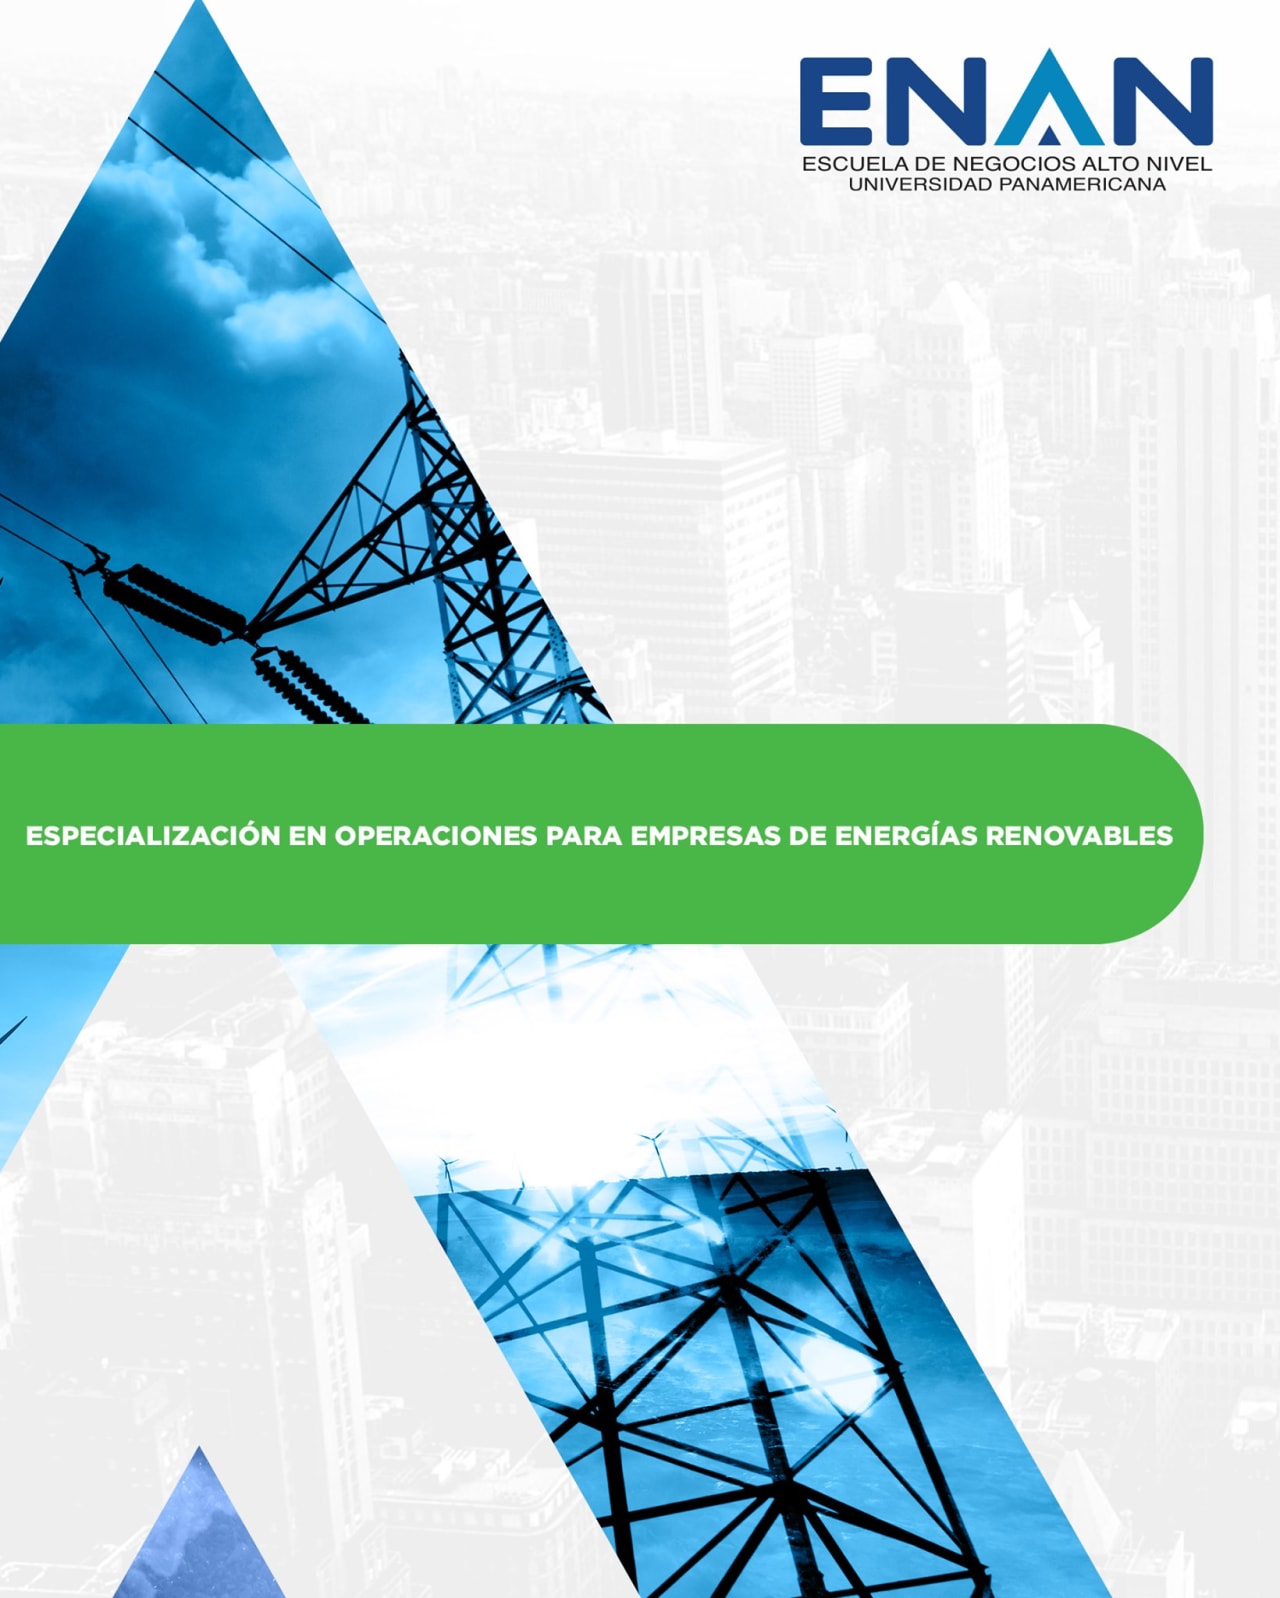 Escuela de Negocios Alto Nivel - Universidad Panamericana de Guatemala Specialisatie in operaties voor duurzame energiebedrijven